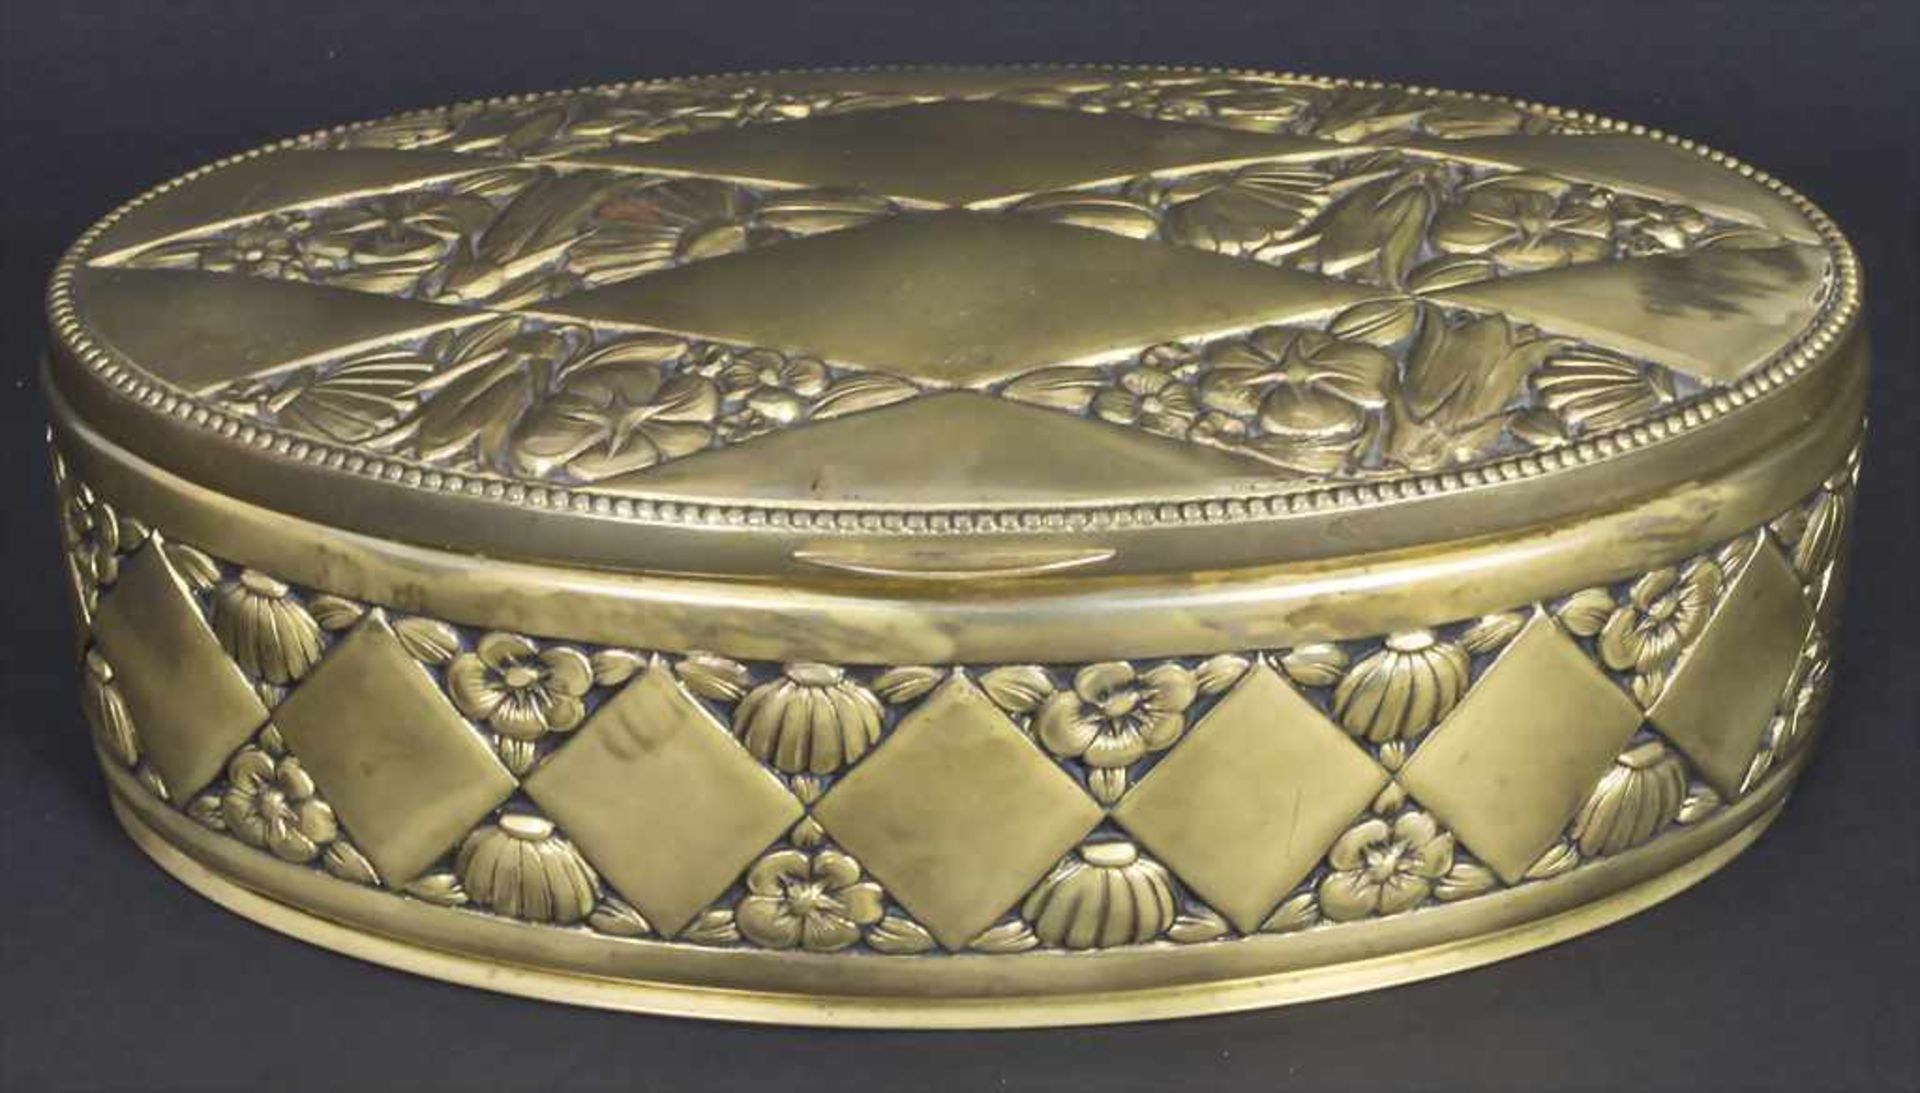 Jugendstil Deckeldose / An Art Nouveau lidded bowl, Erhard & Söhne, Schwäbisch Gmünd, Entwurf wohl